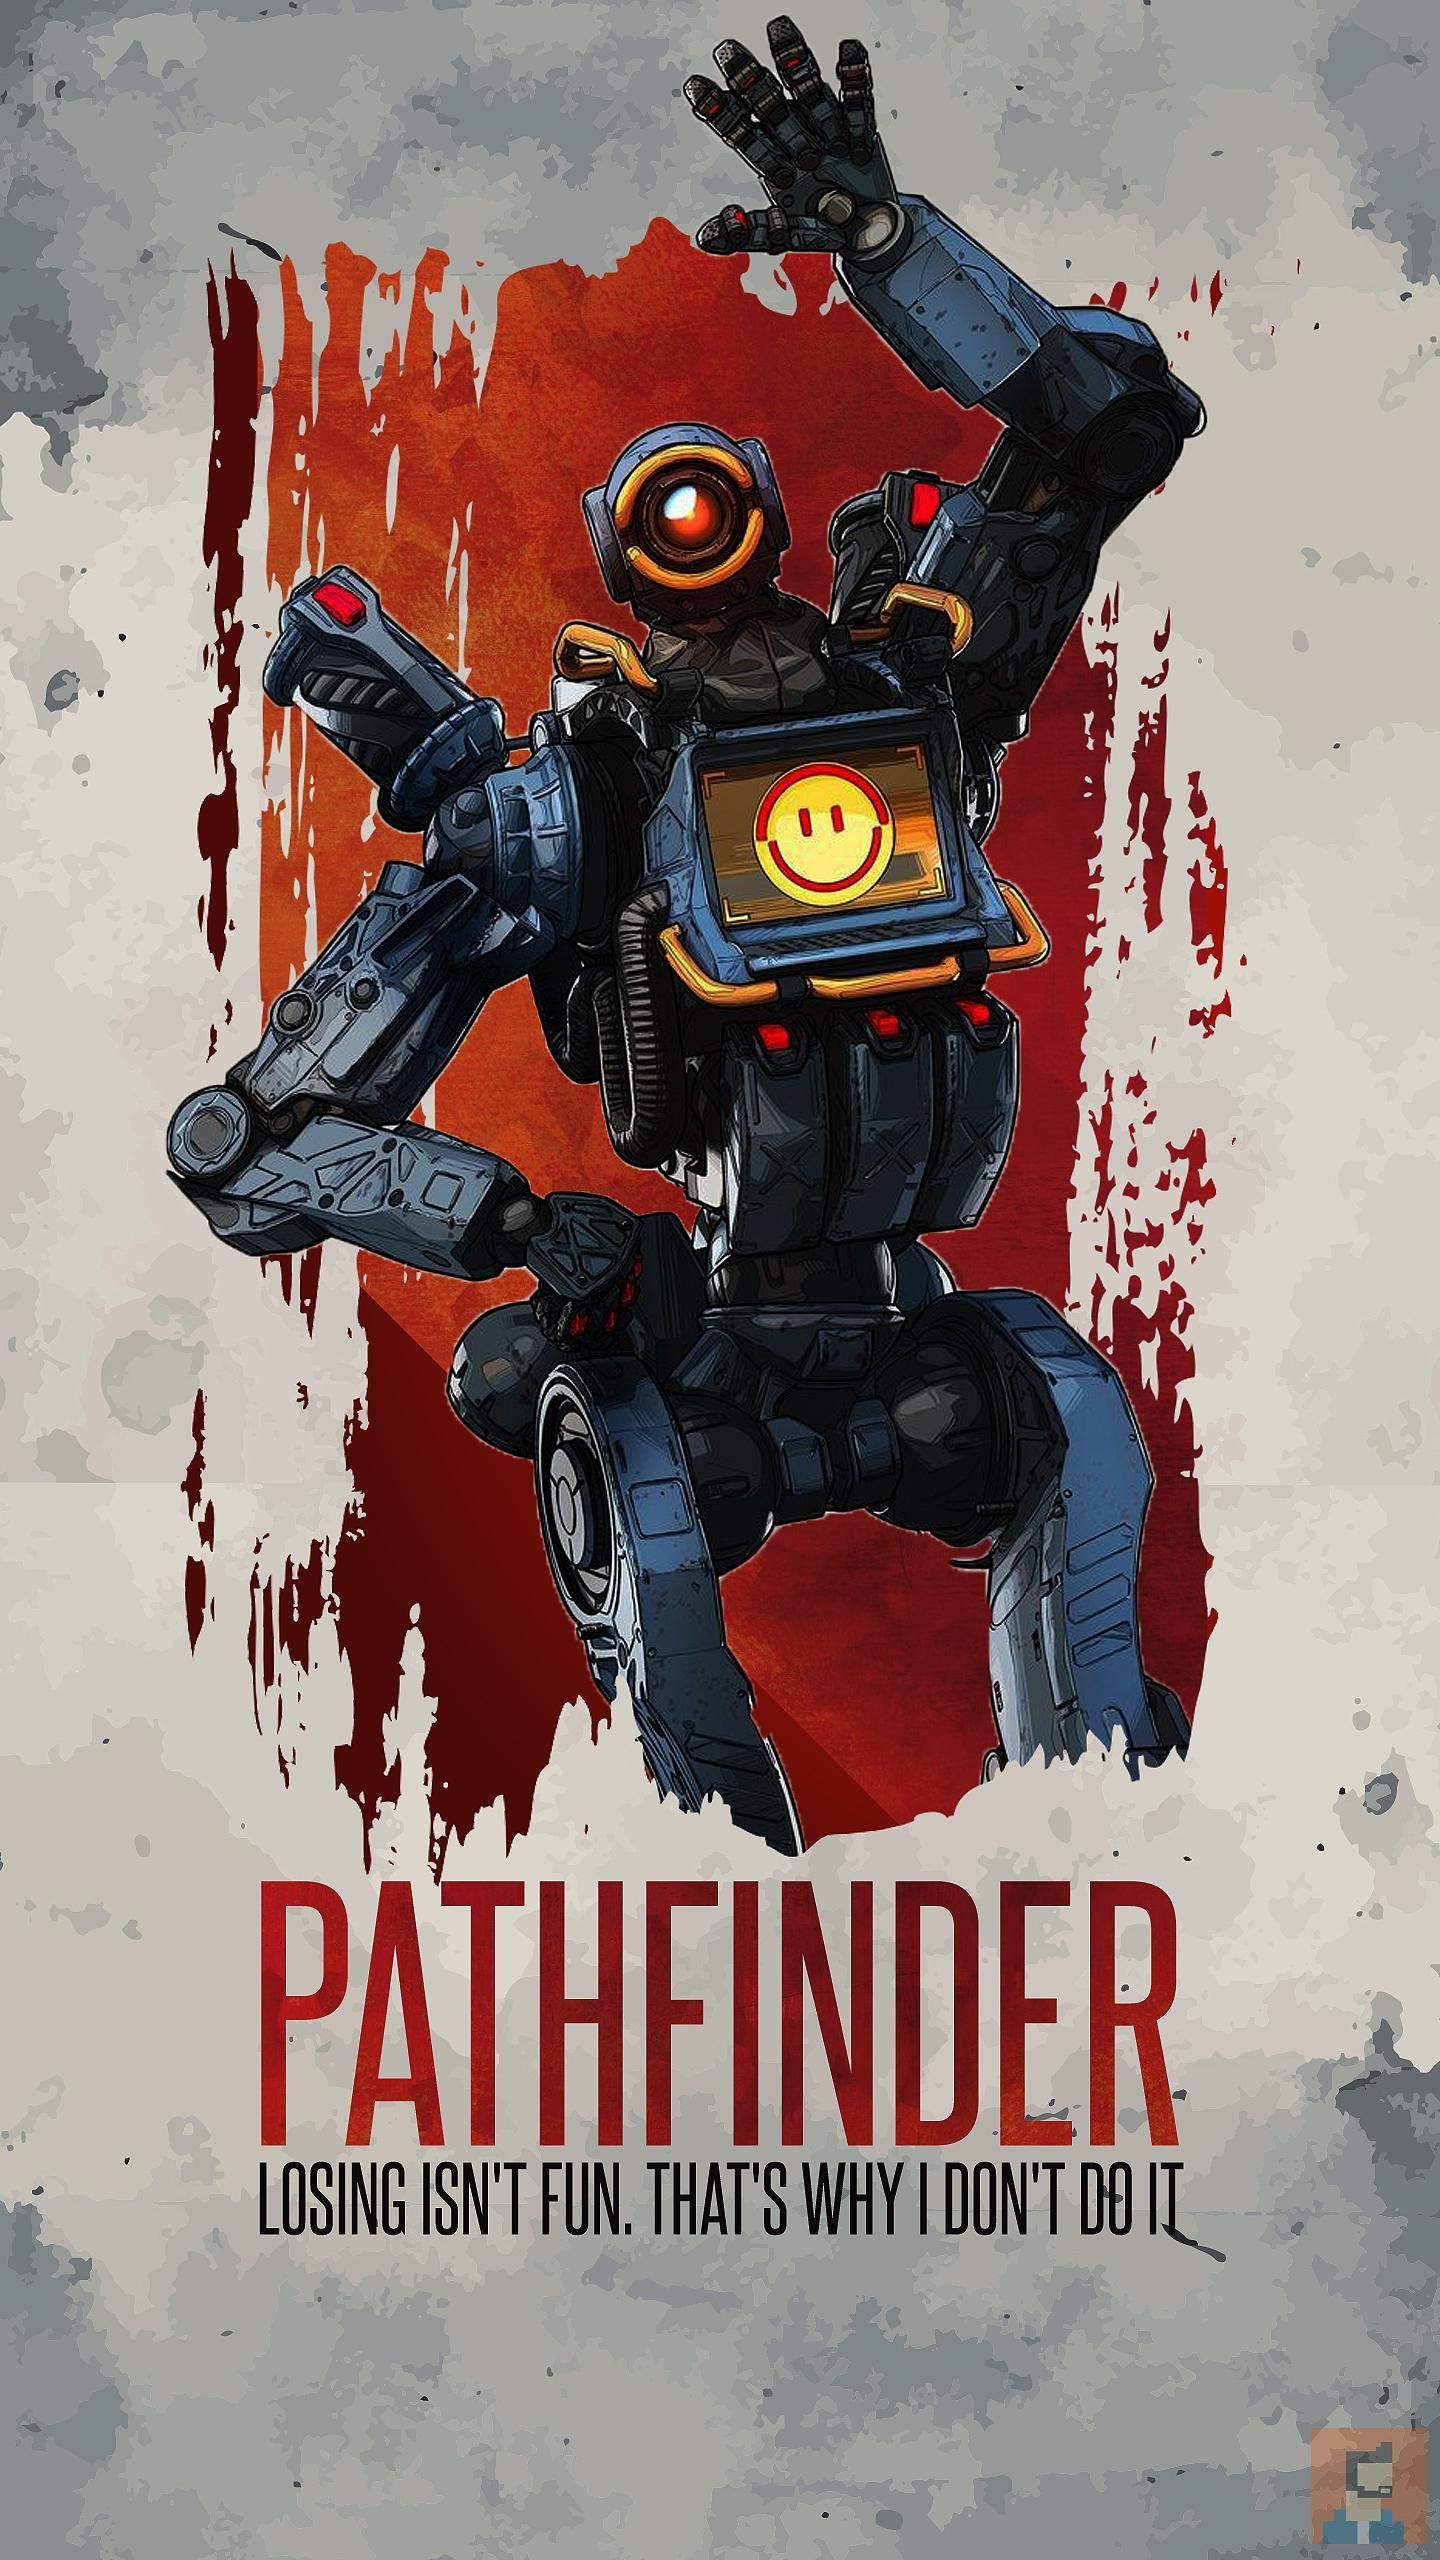 Pathfinder Apex Legends Wallpaper. ゲ .com